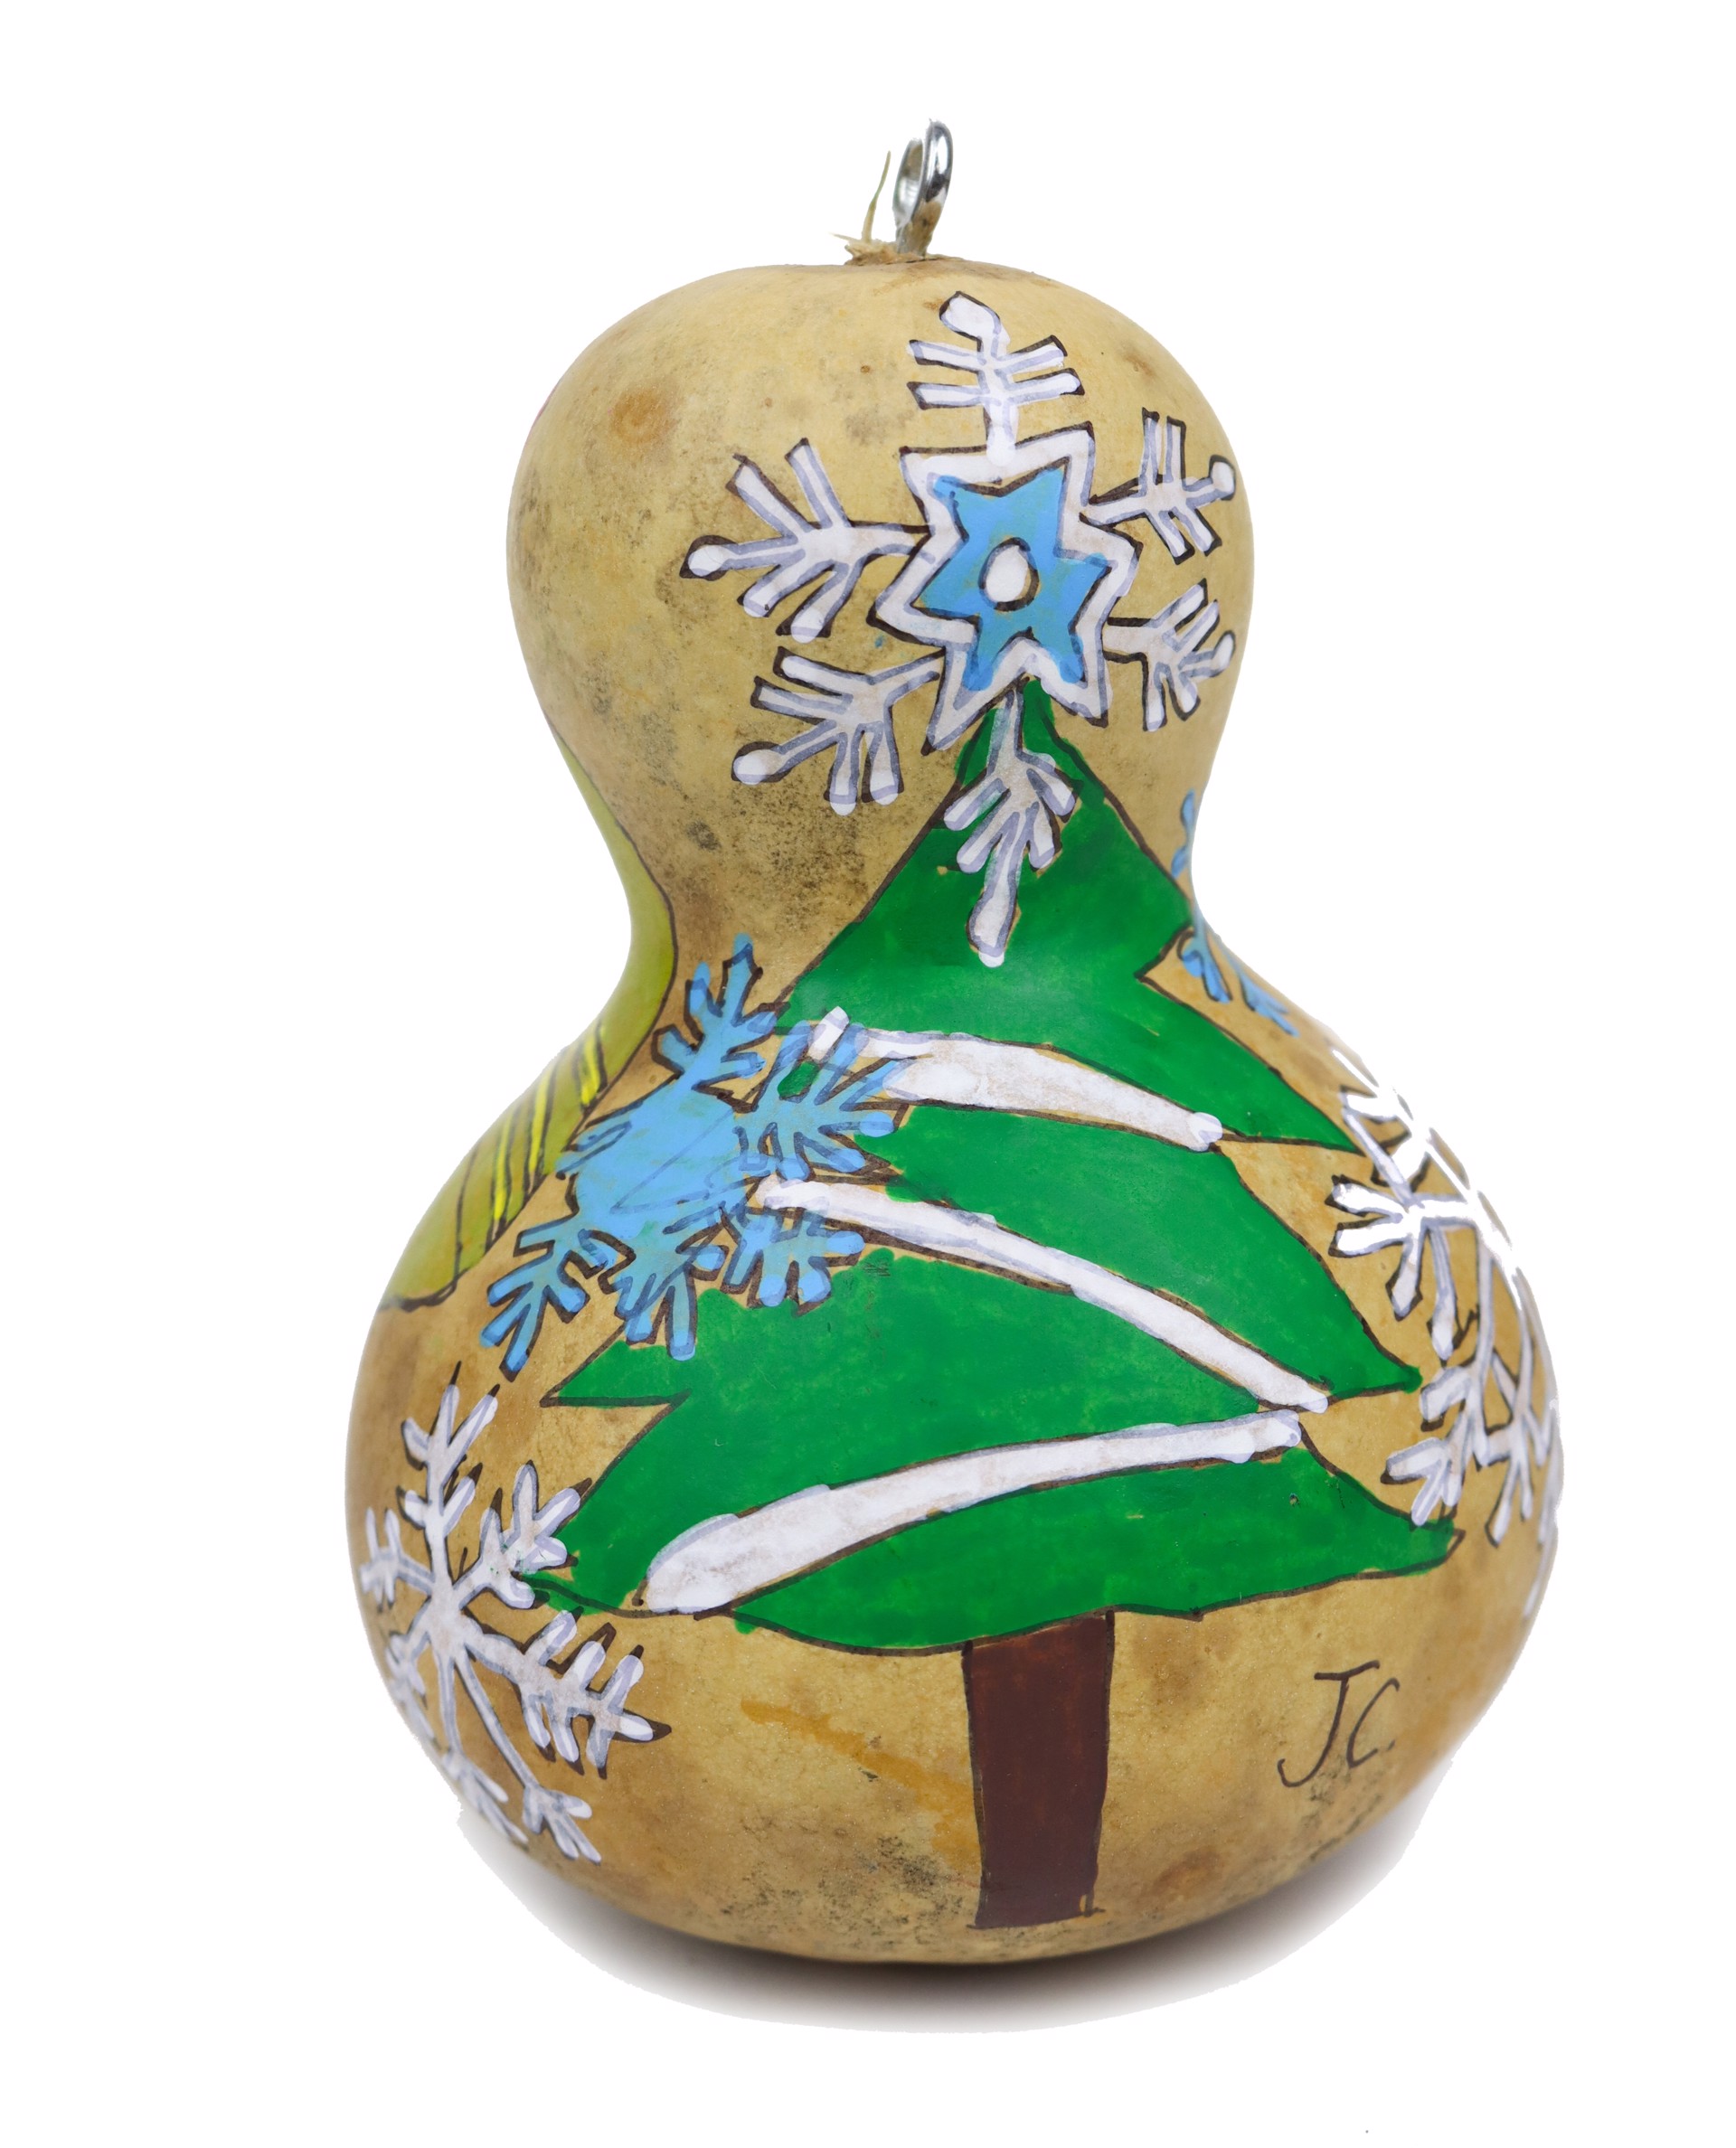 Winter Bells (gourd ornament) by Jacqueline Coleman